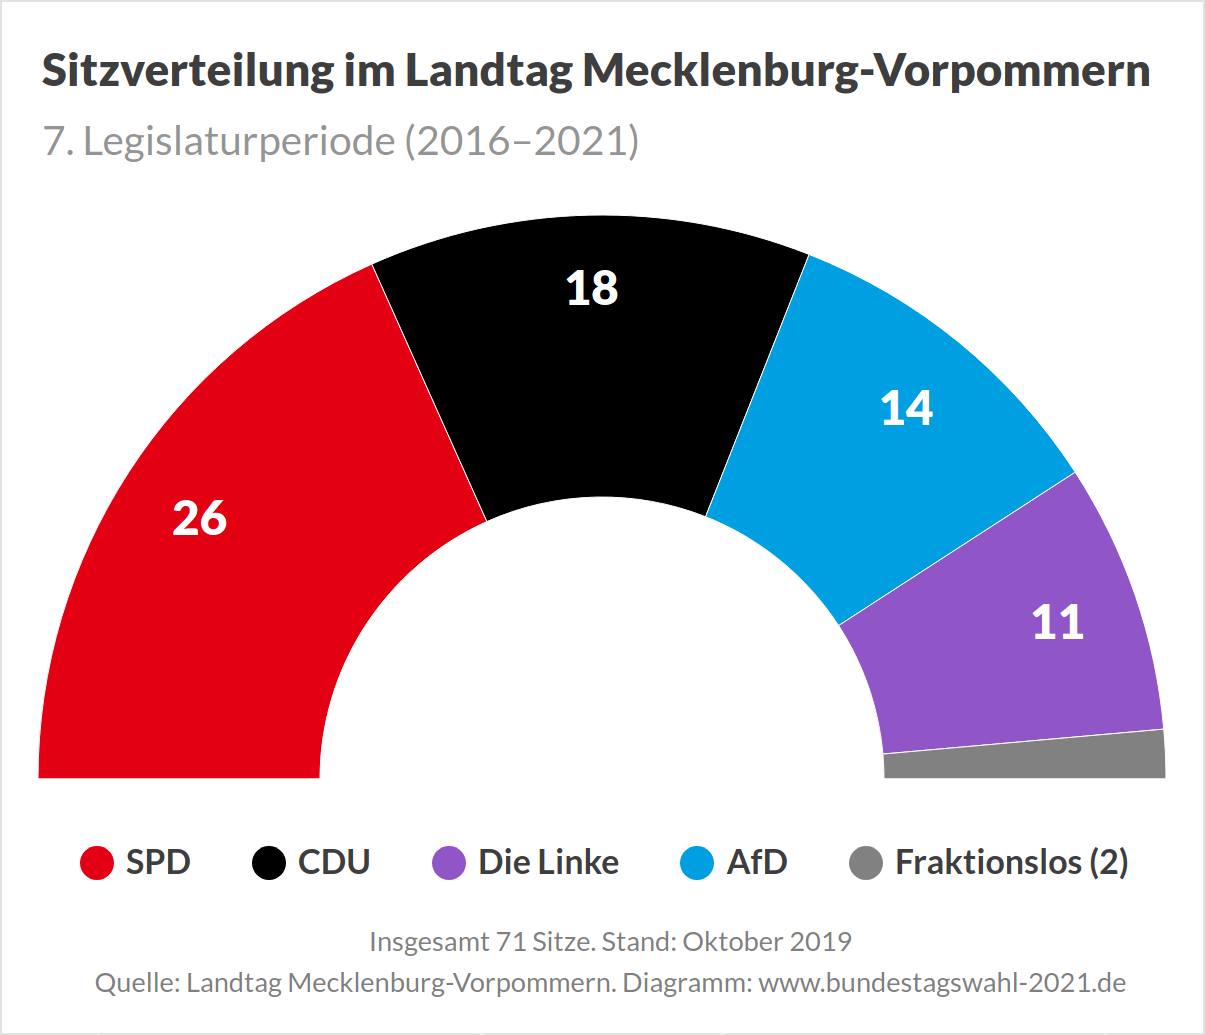 Sitzverteilung im Landtag Mecklenburg-Vorpommern vor der Landtagswahl 2021 (Ausgangslage)